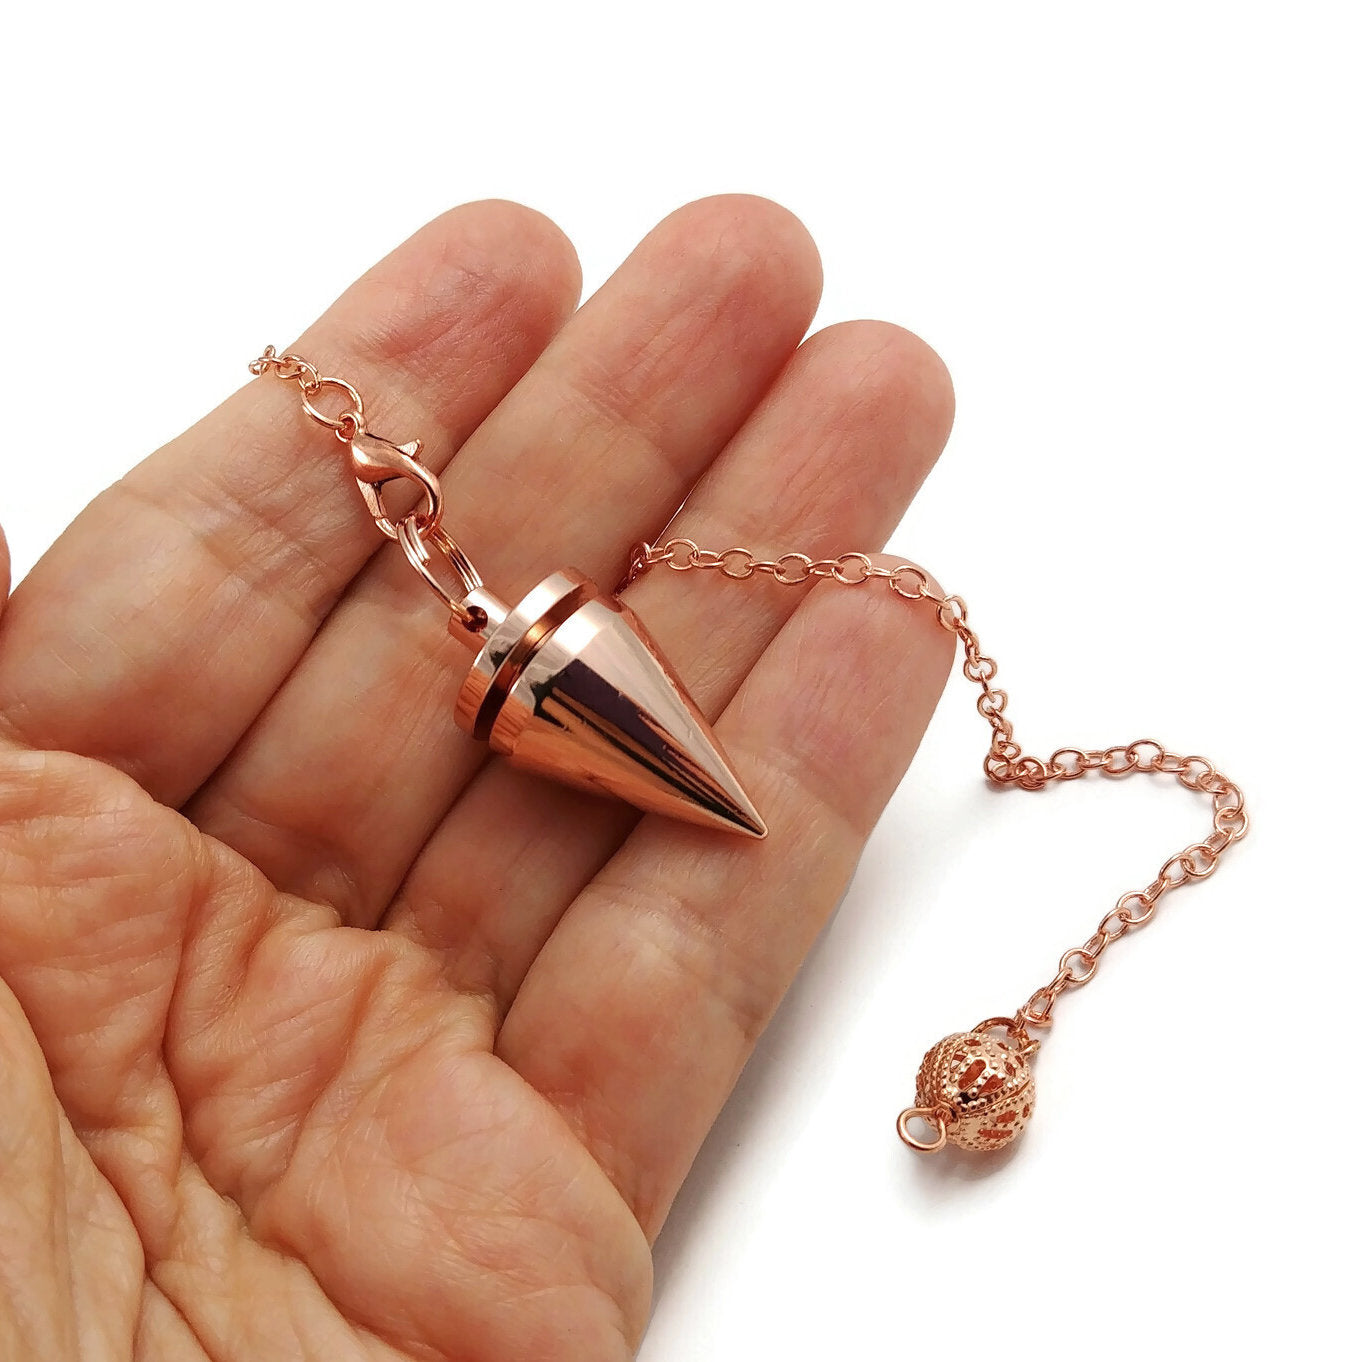 Metal dowsing pointed pendulum - Silver, gold, rose gold or antique bronze